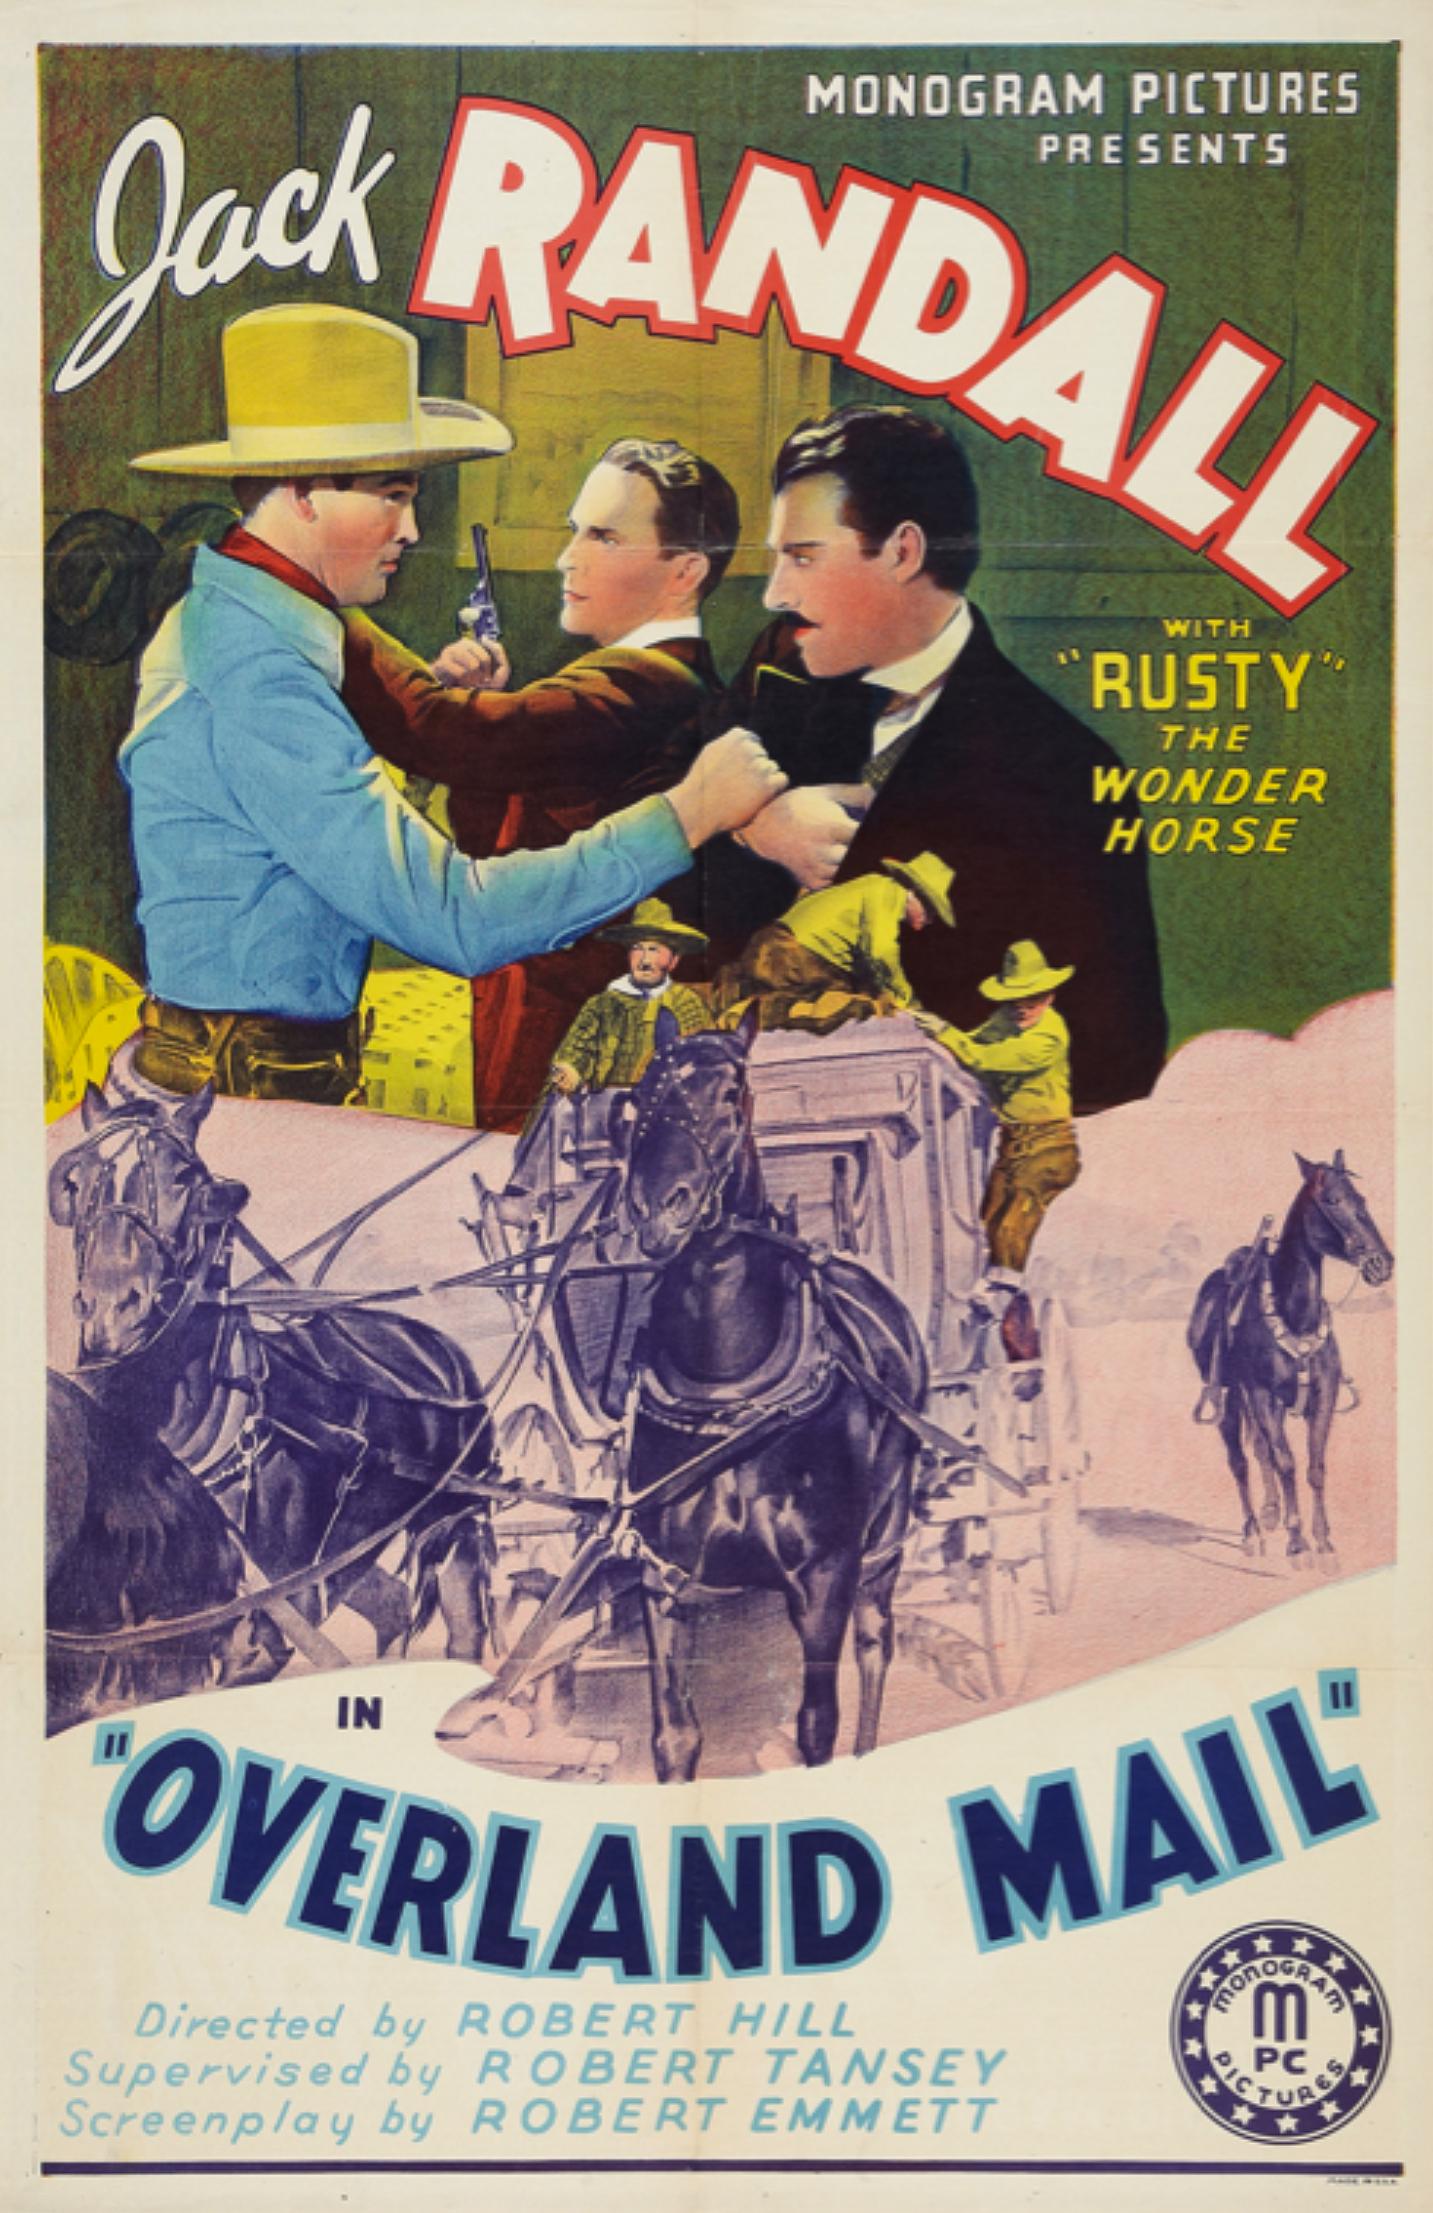 Overland Mail (1939) starring Jack Randall on DVD on DVD